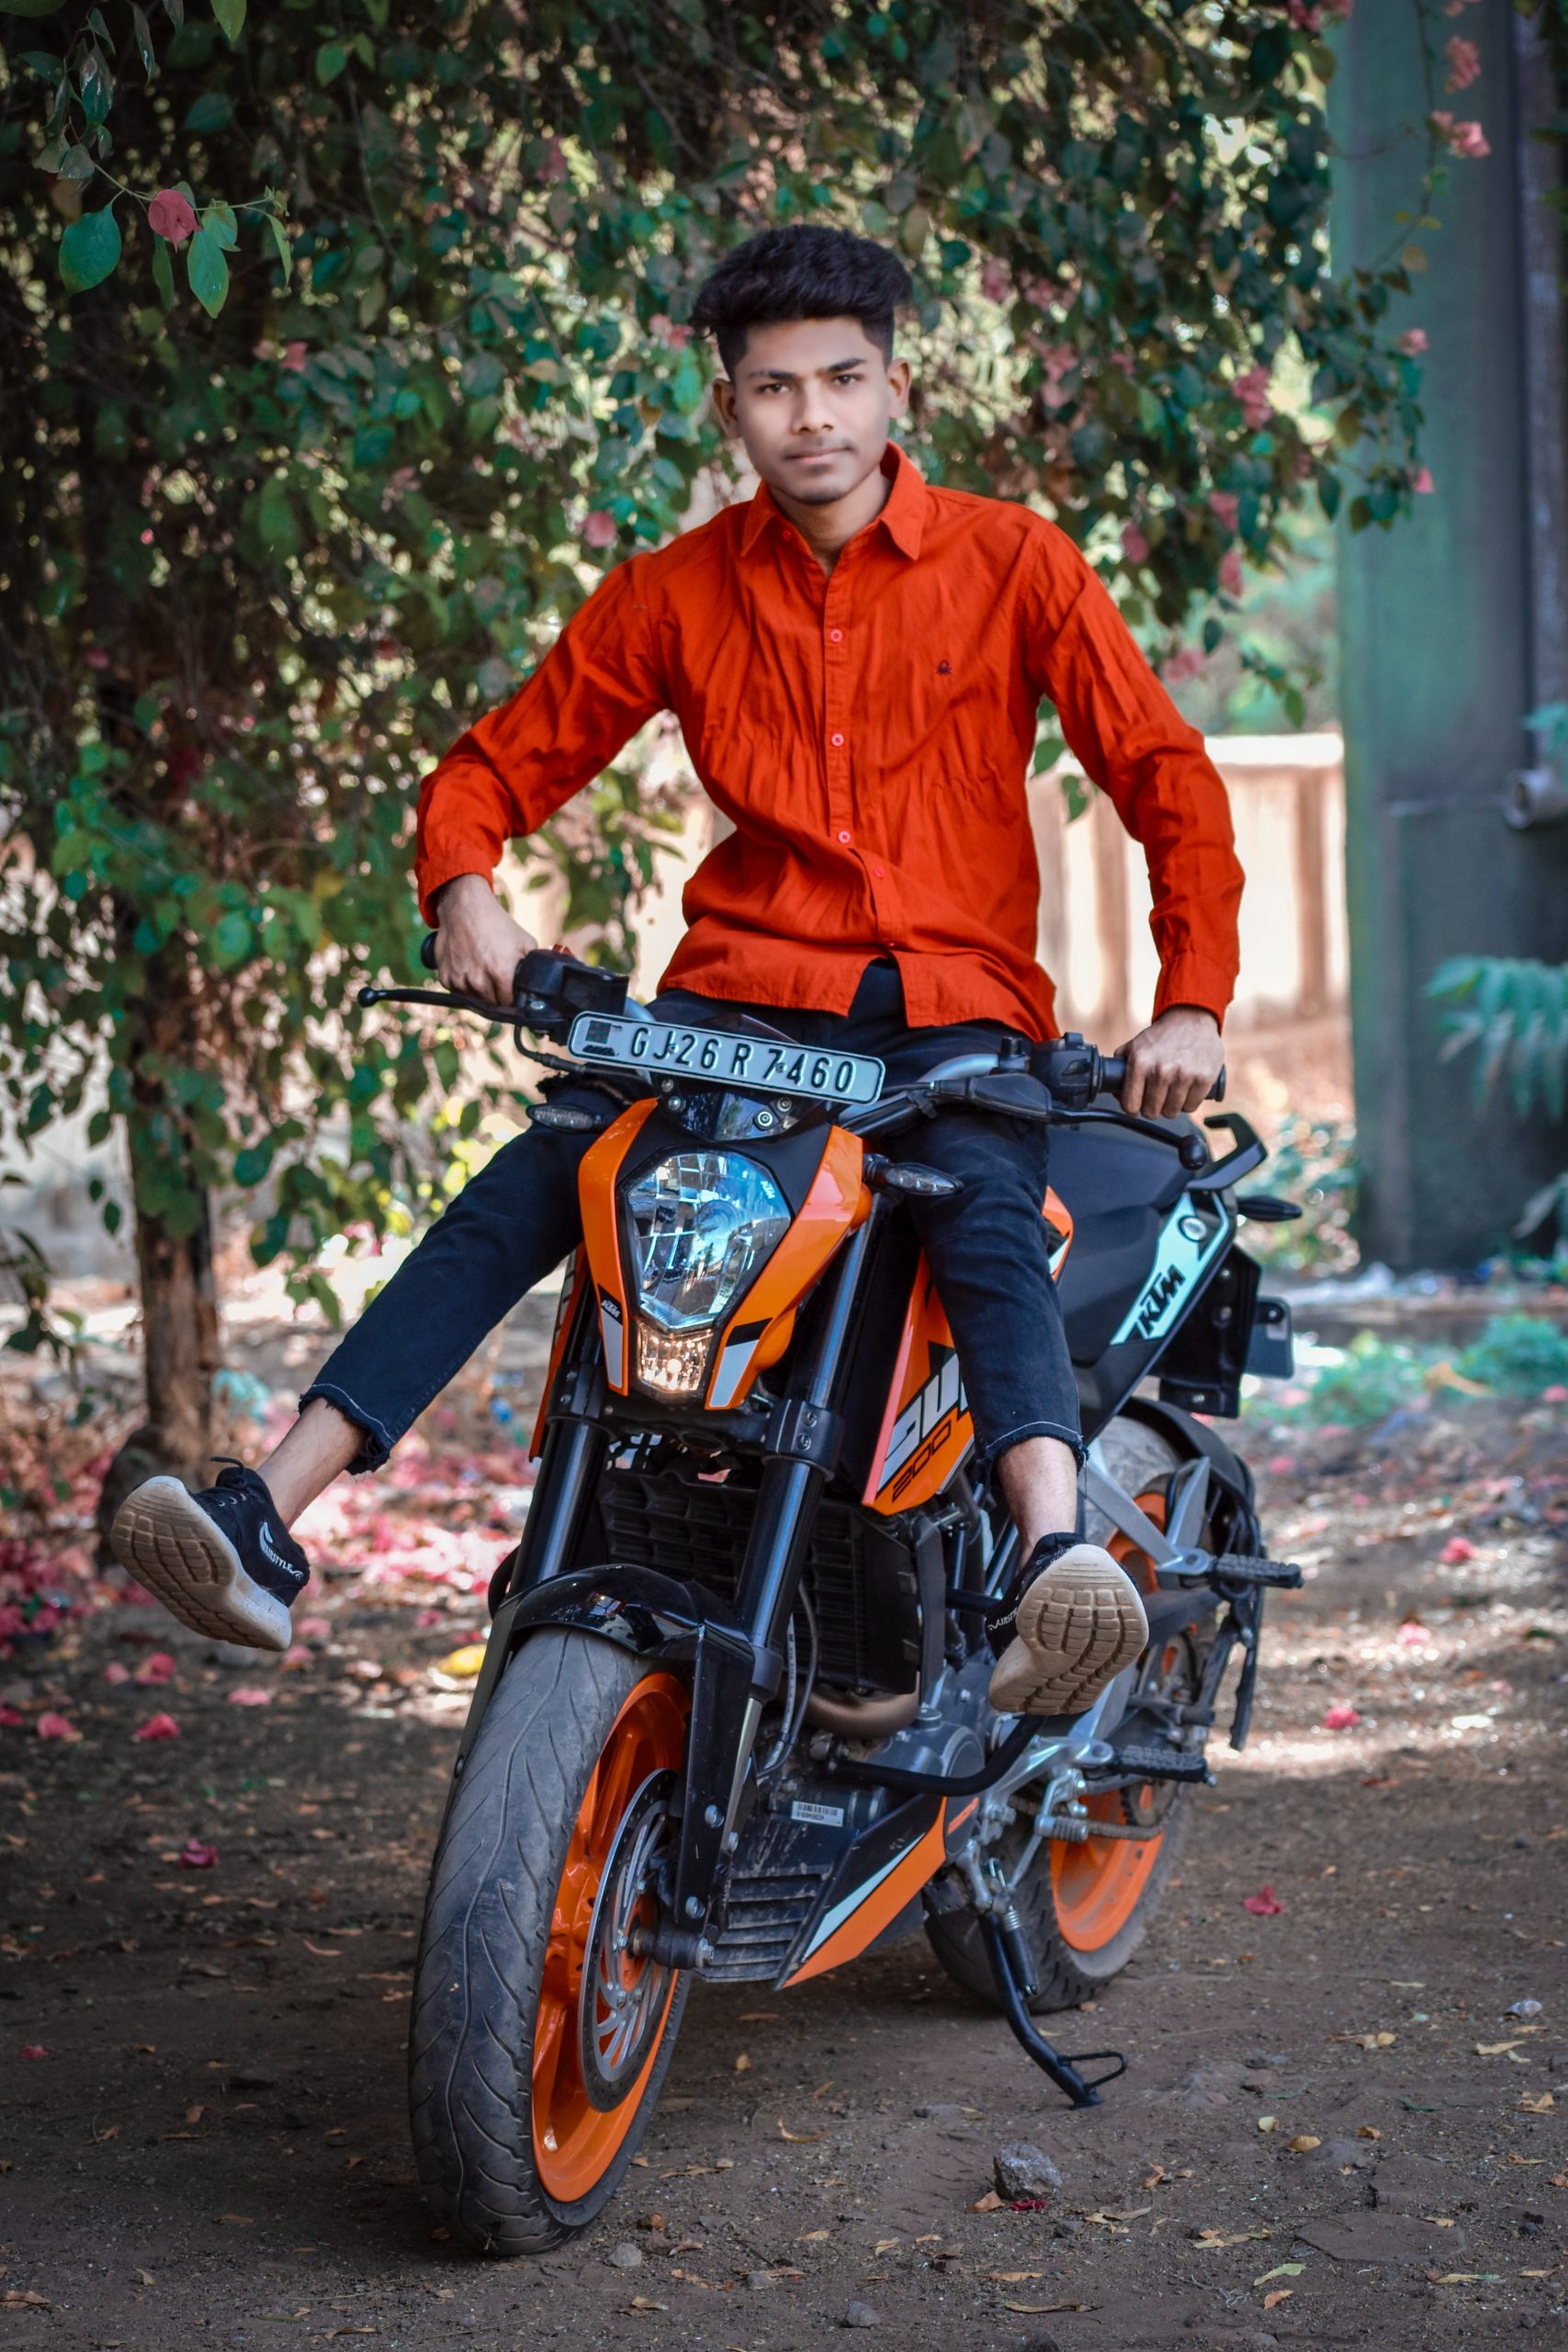 Boy posing on KTM bike